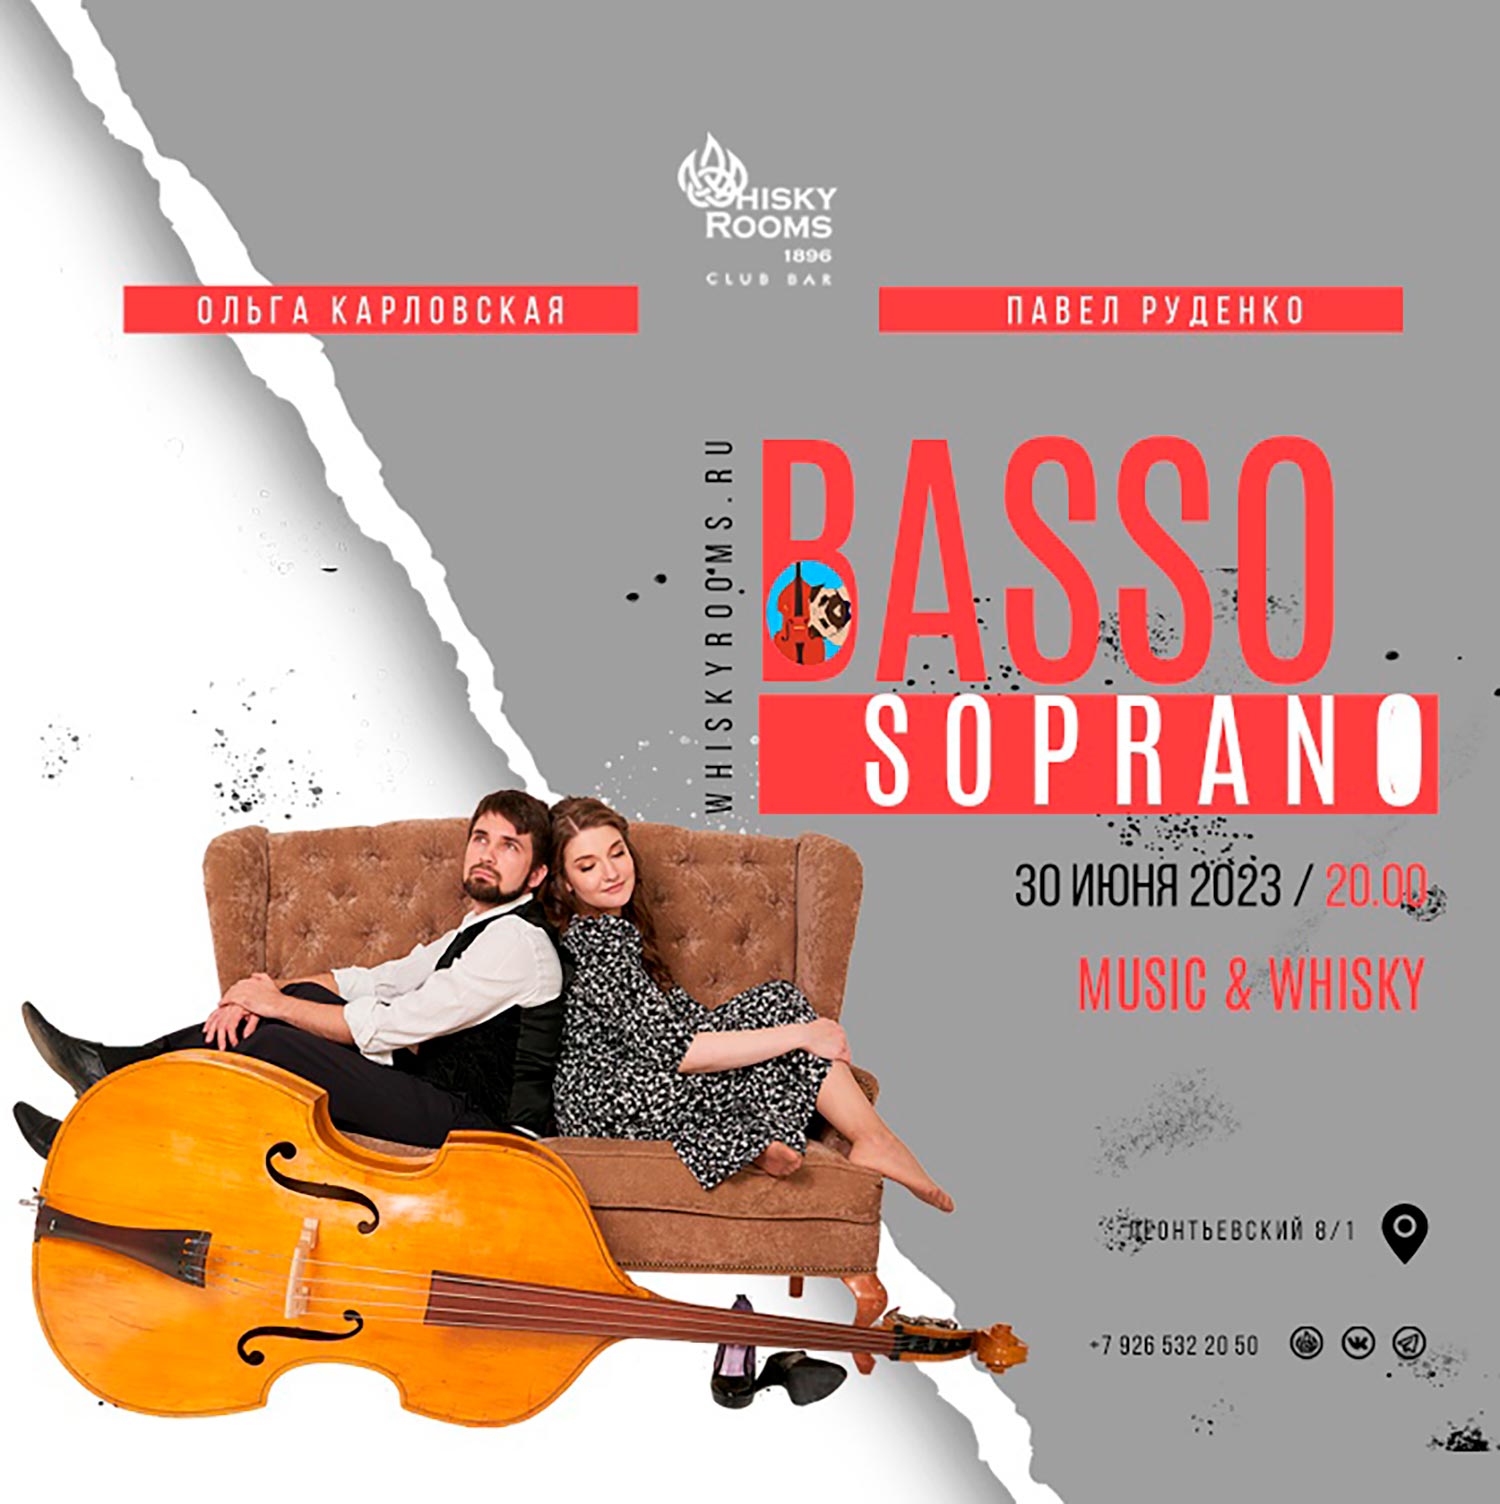 Афиша "MUSIC & WHISKY ♬ BassoSoprano" ресторана "Whisky Rooms